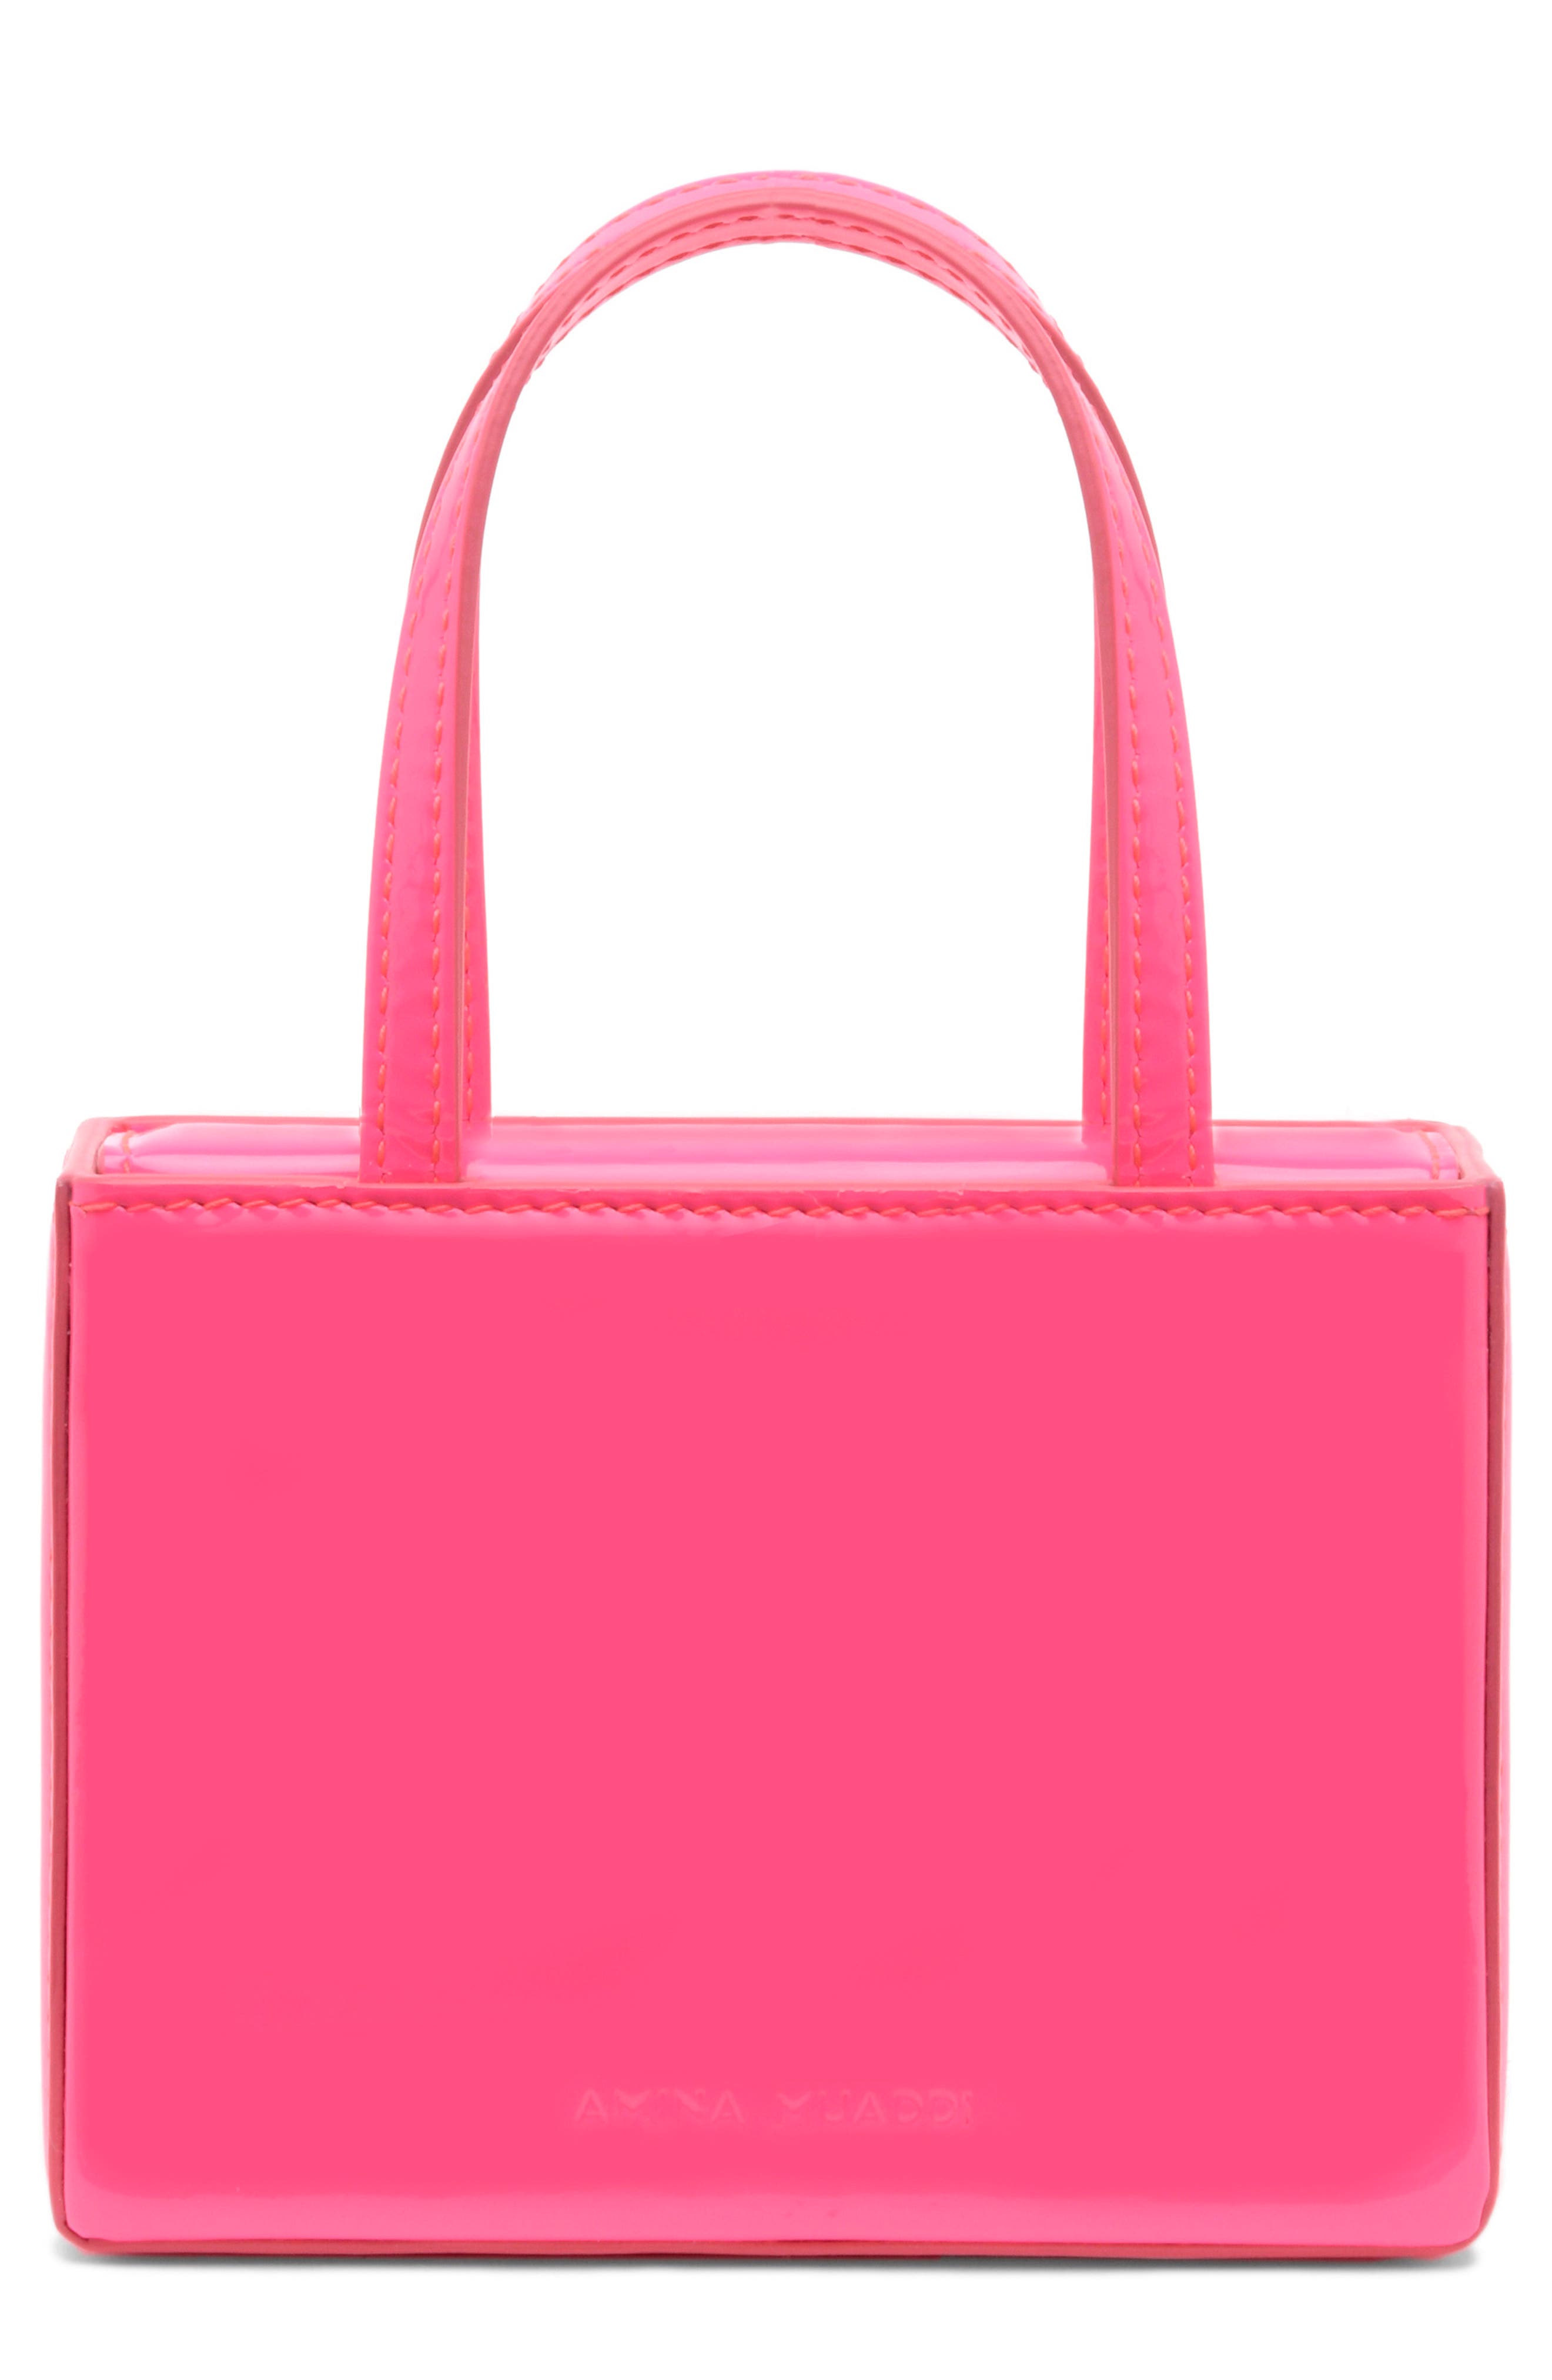 Amina Muaddi Superamini Georgia Leather Top Handle Bag in Pink Patent at Nordstrom